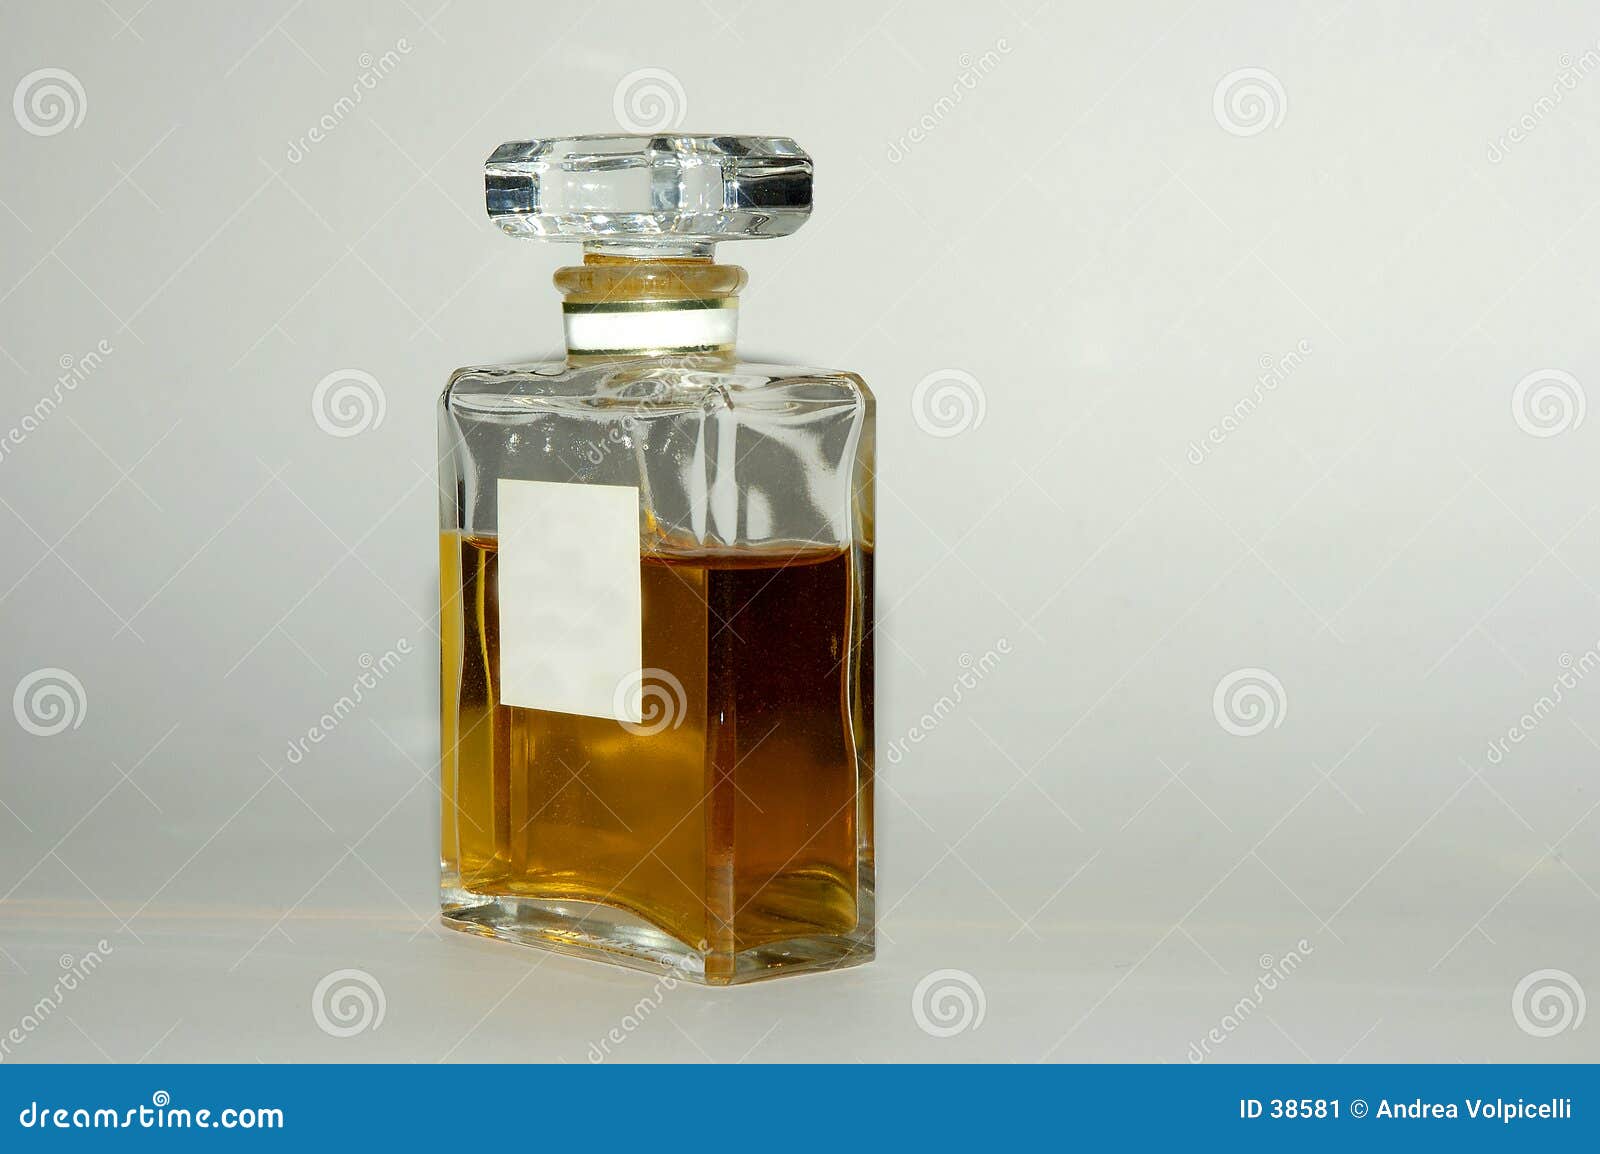 coco chanel mini perfume set